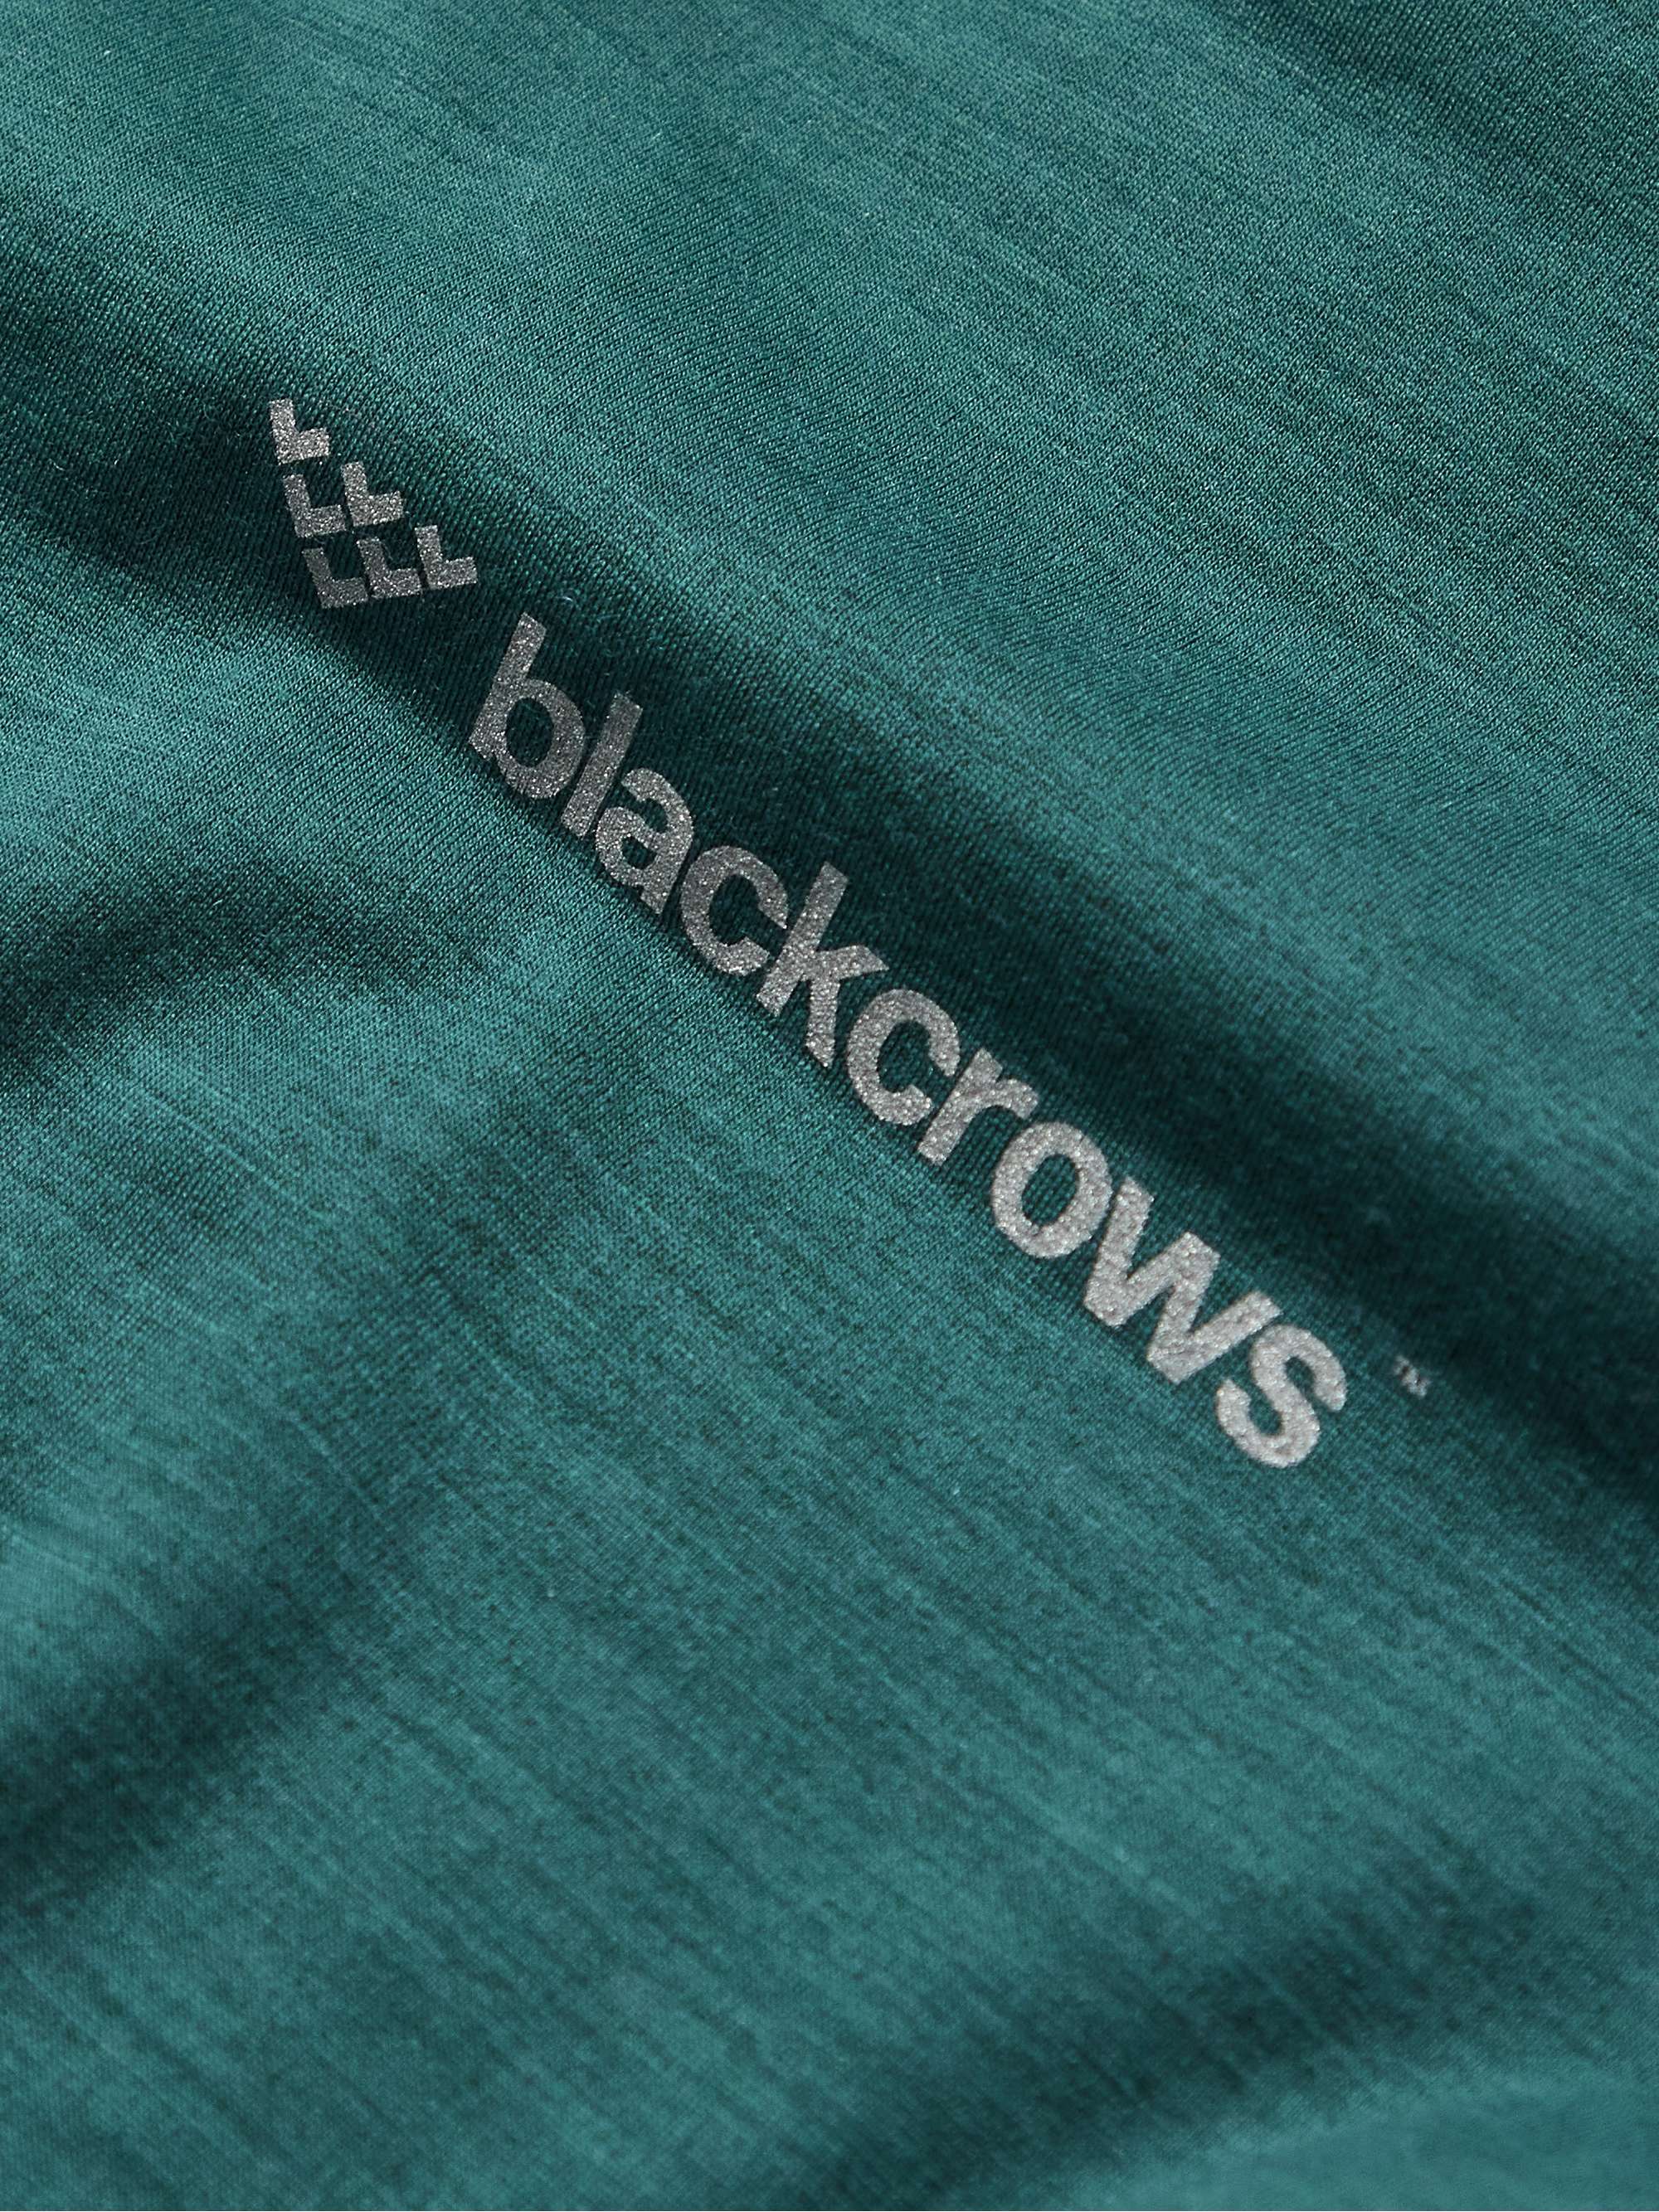 BLACK CROWS Merino Wool-Blend Base Layer